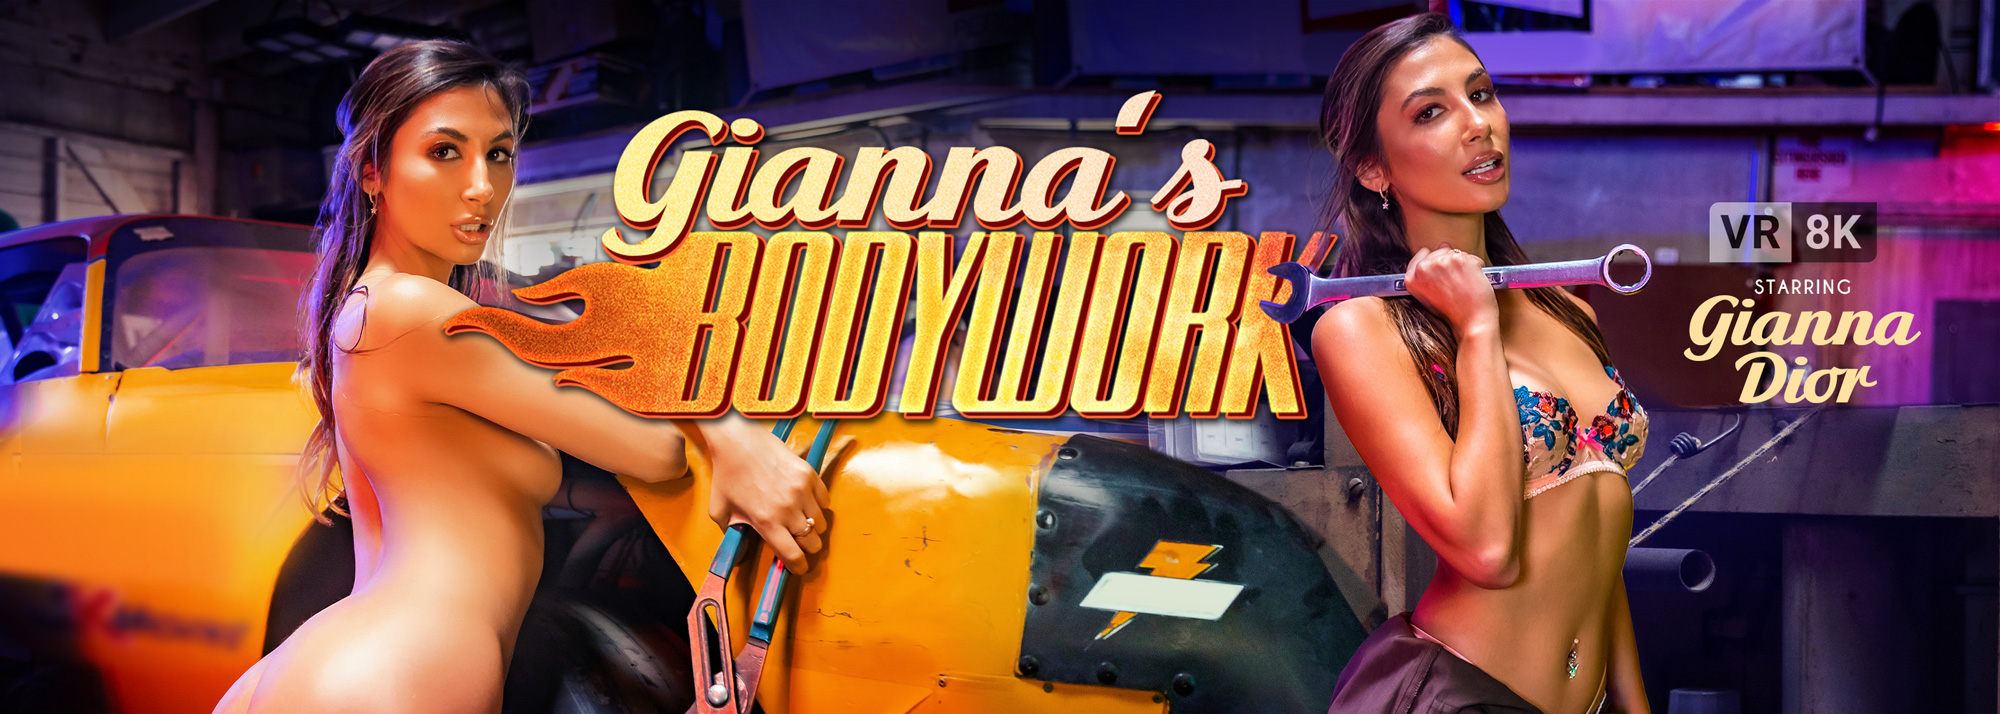 Gianna's Bodywork with Gianna Dior  Slideshow